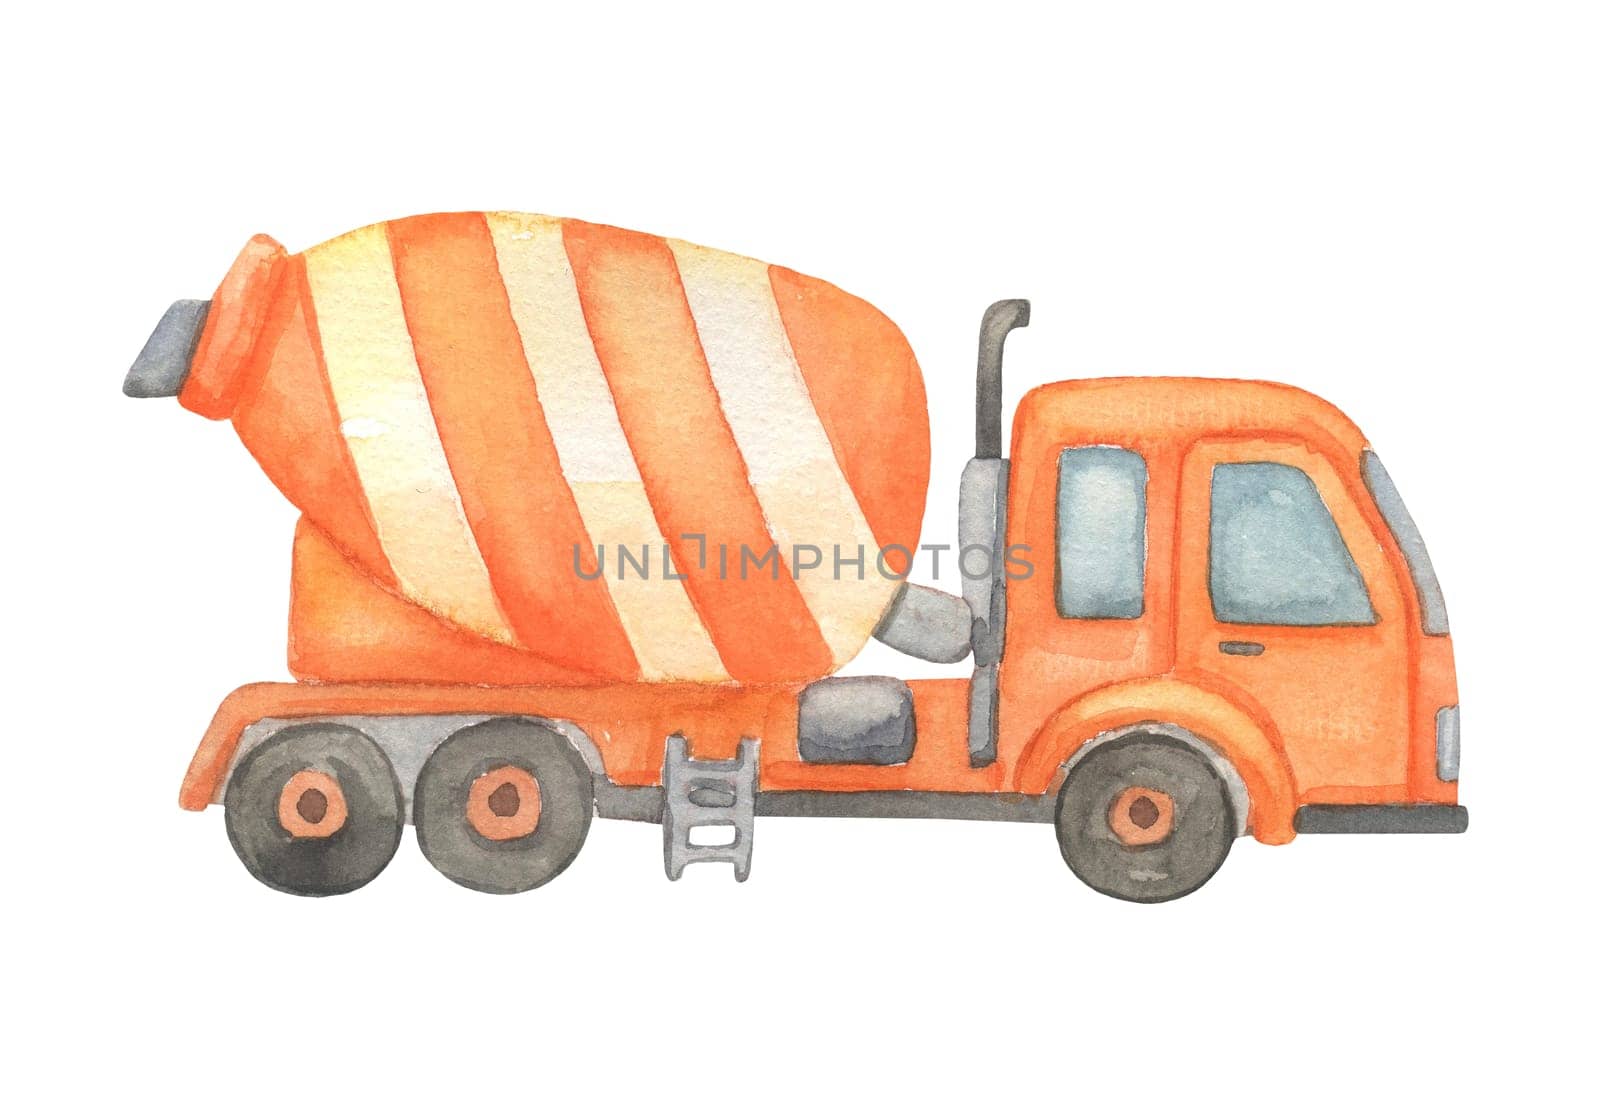 Concrete mixer. Watercolor illustration isolated on white background. Childish construction vehicle